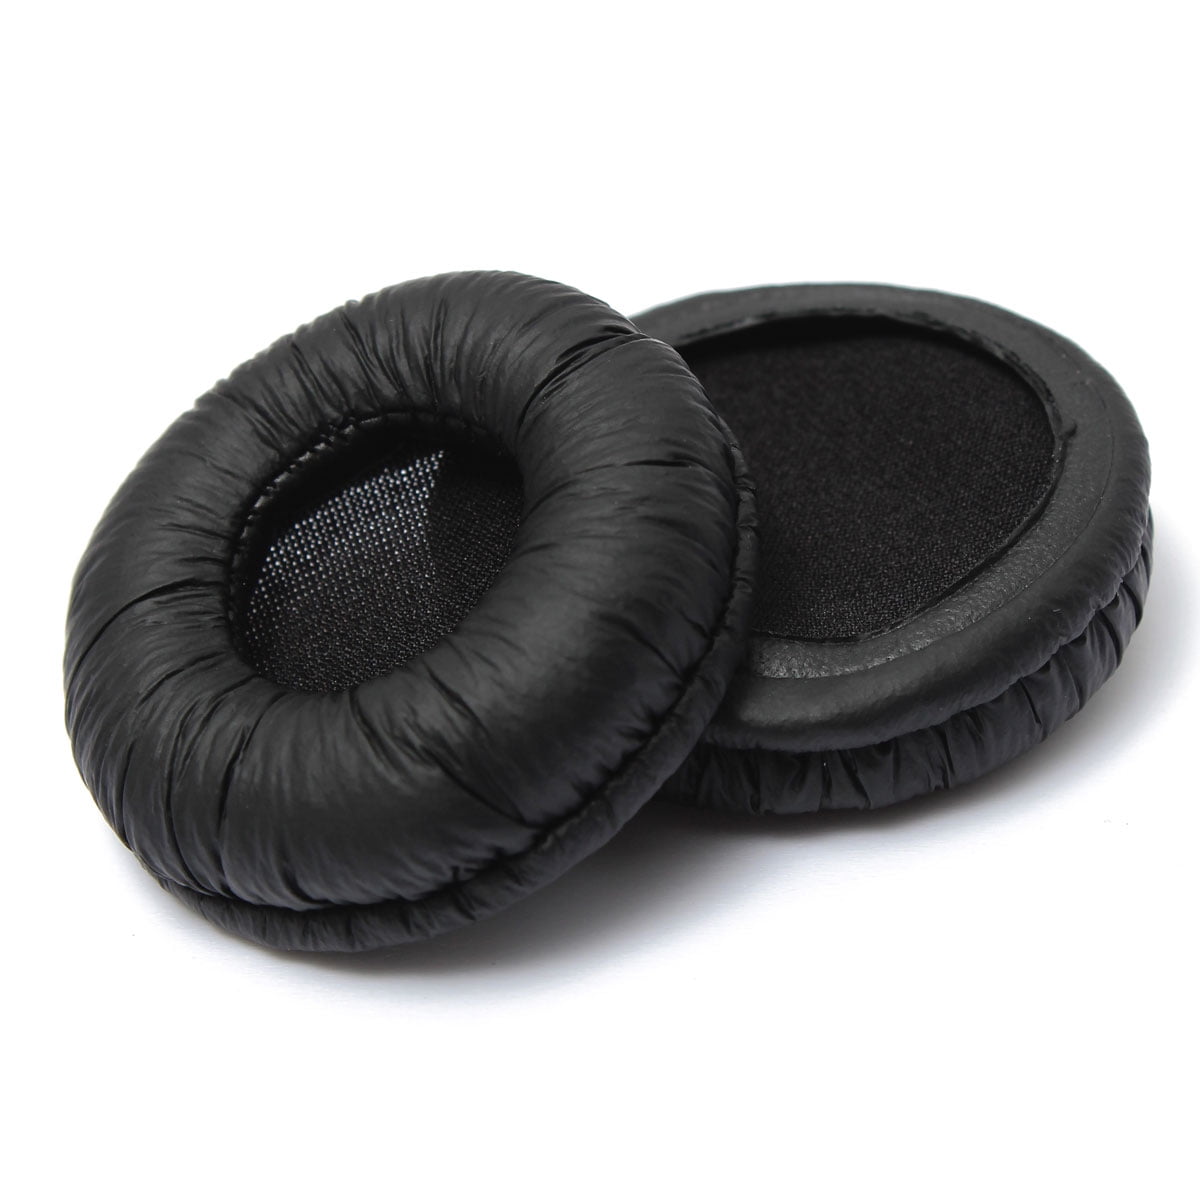 PRENKIN Dustproof Leather Earshield Cushions Sponge Headphone Pads Earbud Cover Headset Earcaps for Sennheiser PX100 PX200